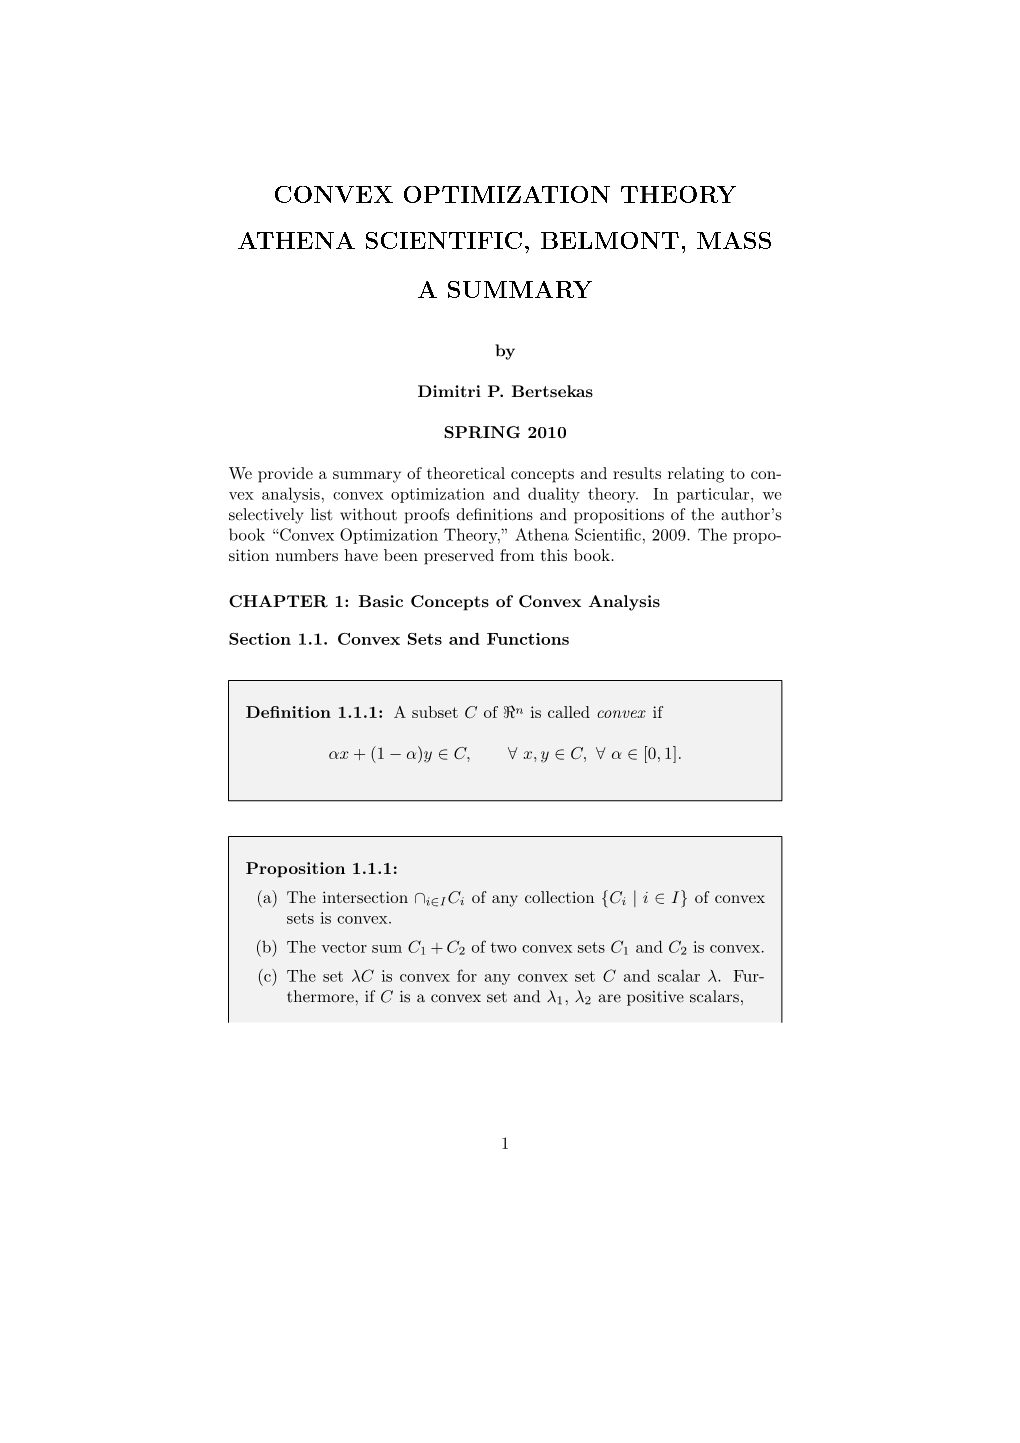 Convex Optimization Theory, Athena Scientific: a Summary